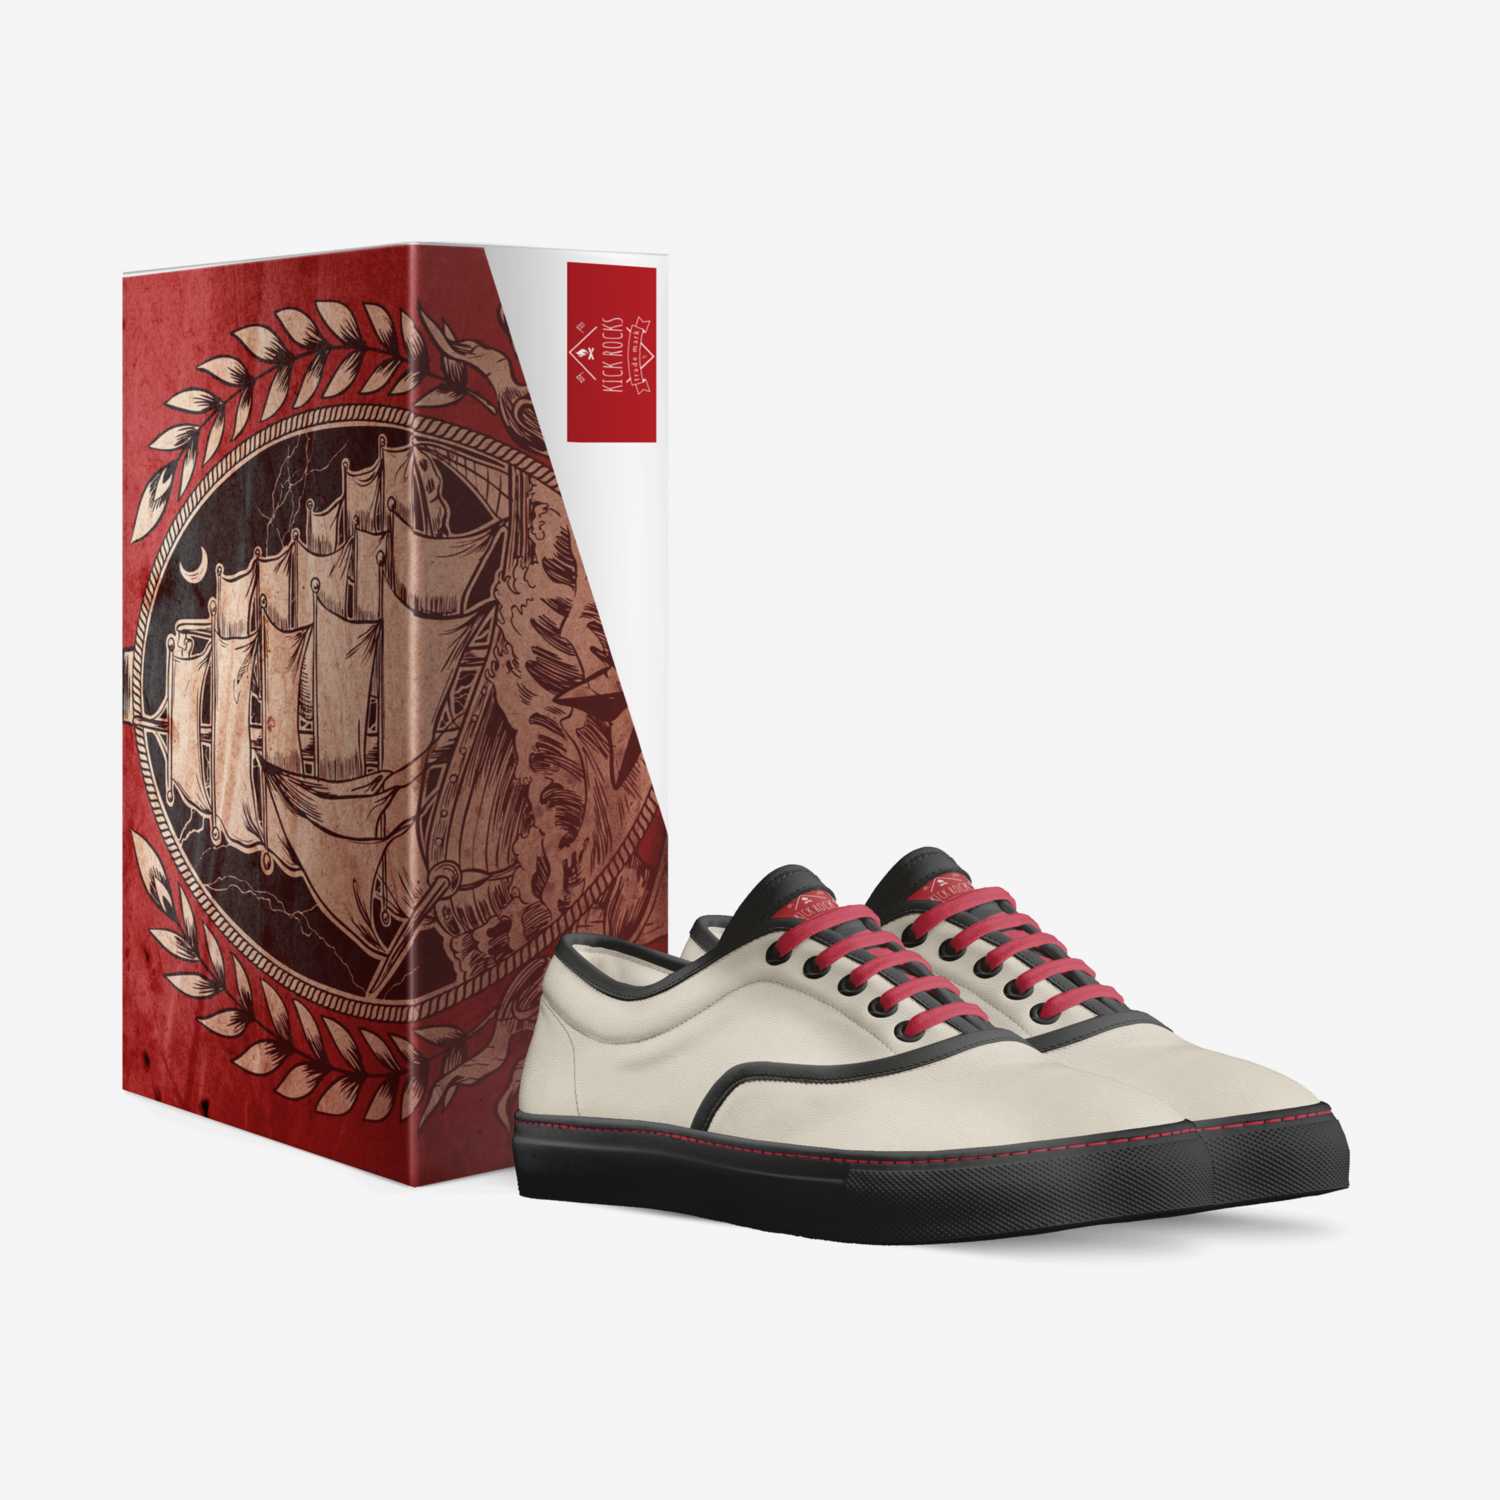 Kick Rocks custom made in Italy shoes by Rocky Damiano | Box view